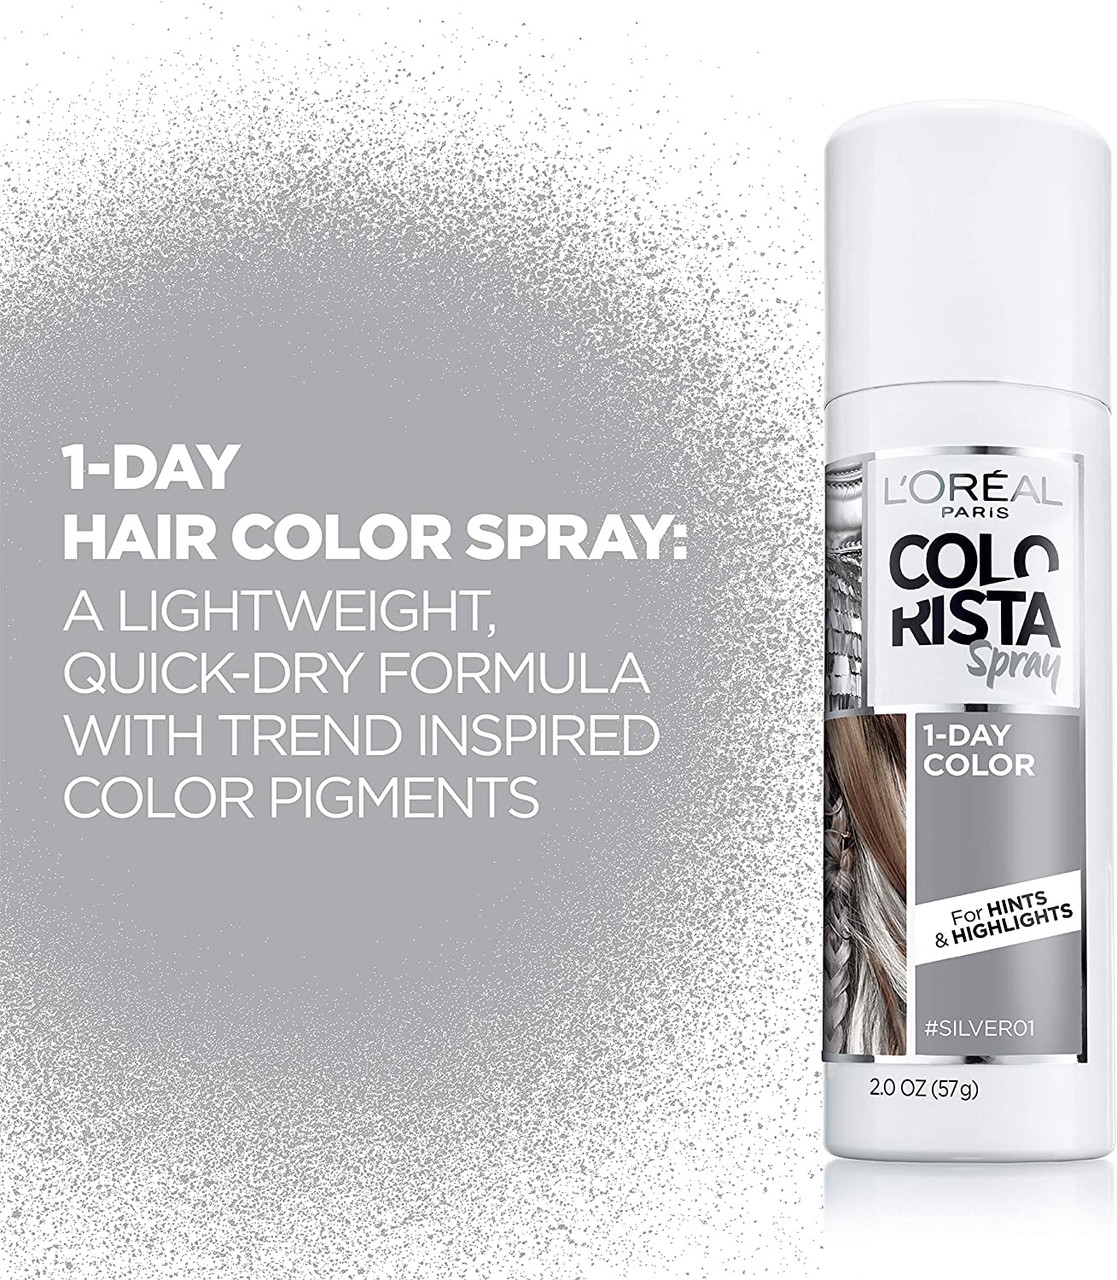 L'Oreal Paris Colorista 1-Day Washable Temporary Hair Color Spray, Silver,  2 Ounce